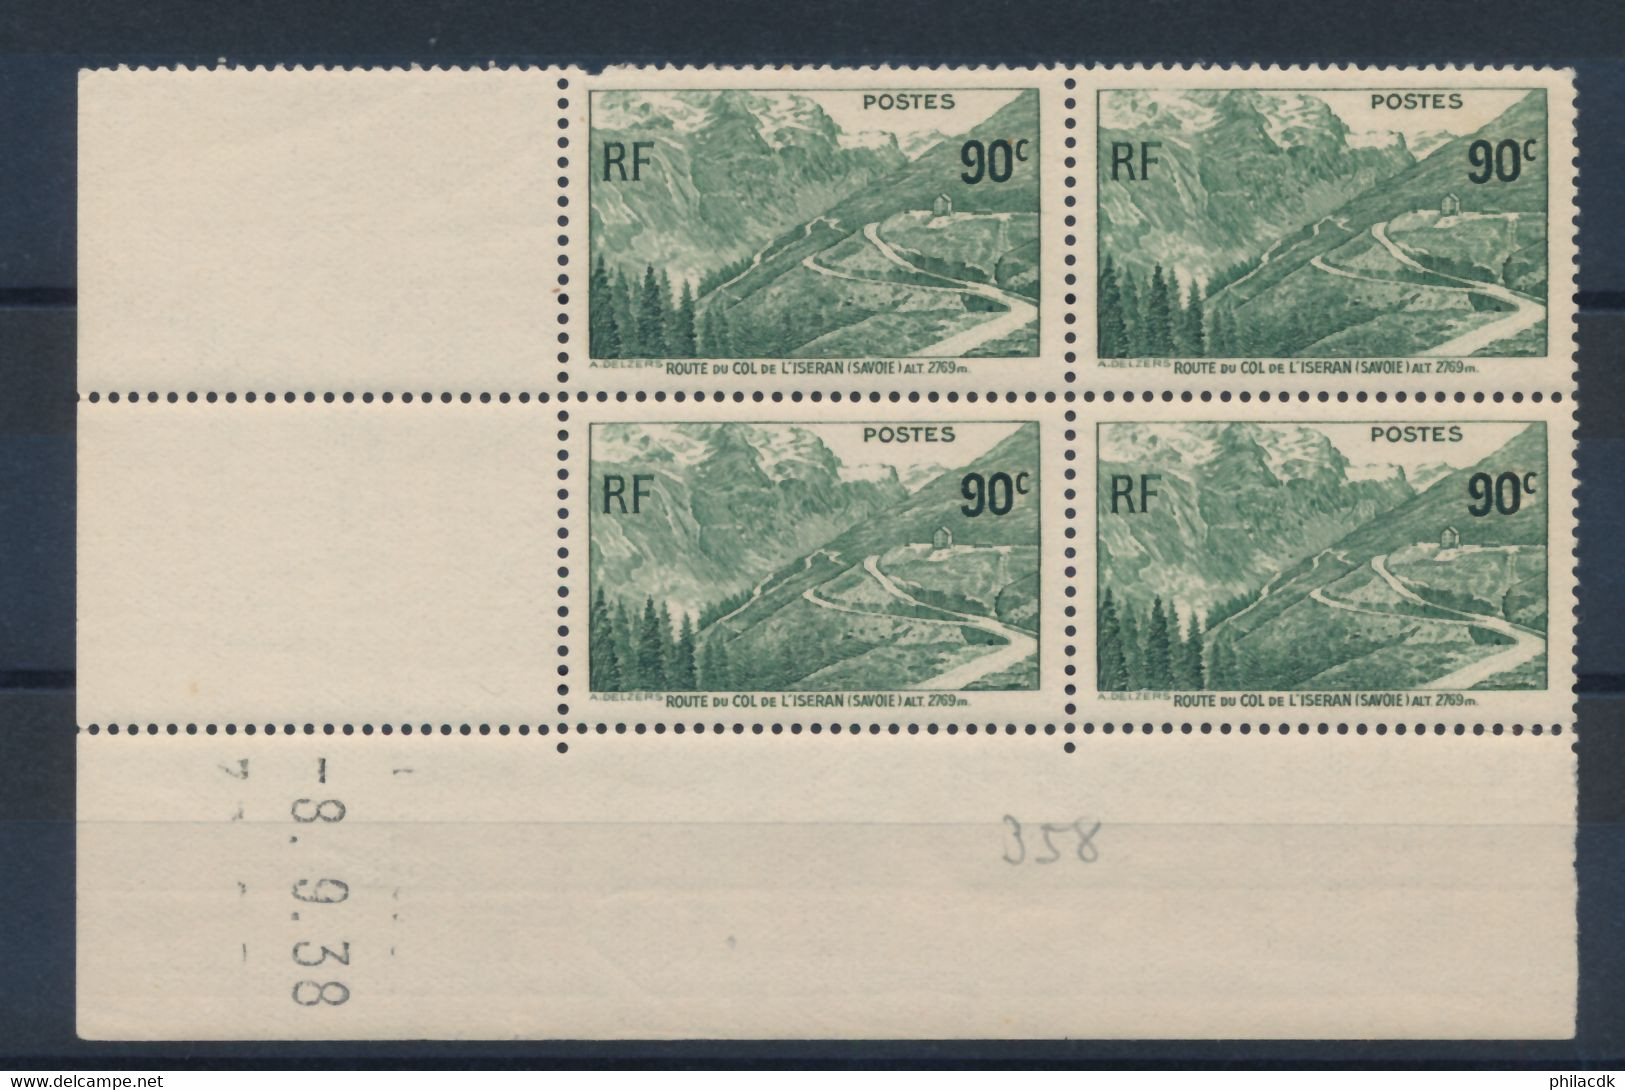 FRANCE - COIN DATE DU 8 SEPTEMBRE 1938 N° 358 NEUF* AVEC GOMME ALTEREE - 1930-1939